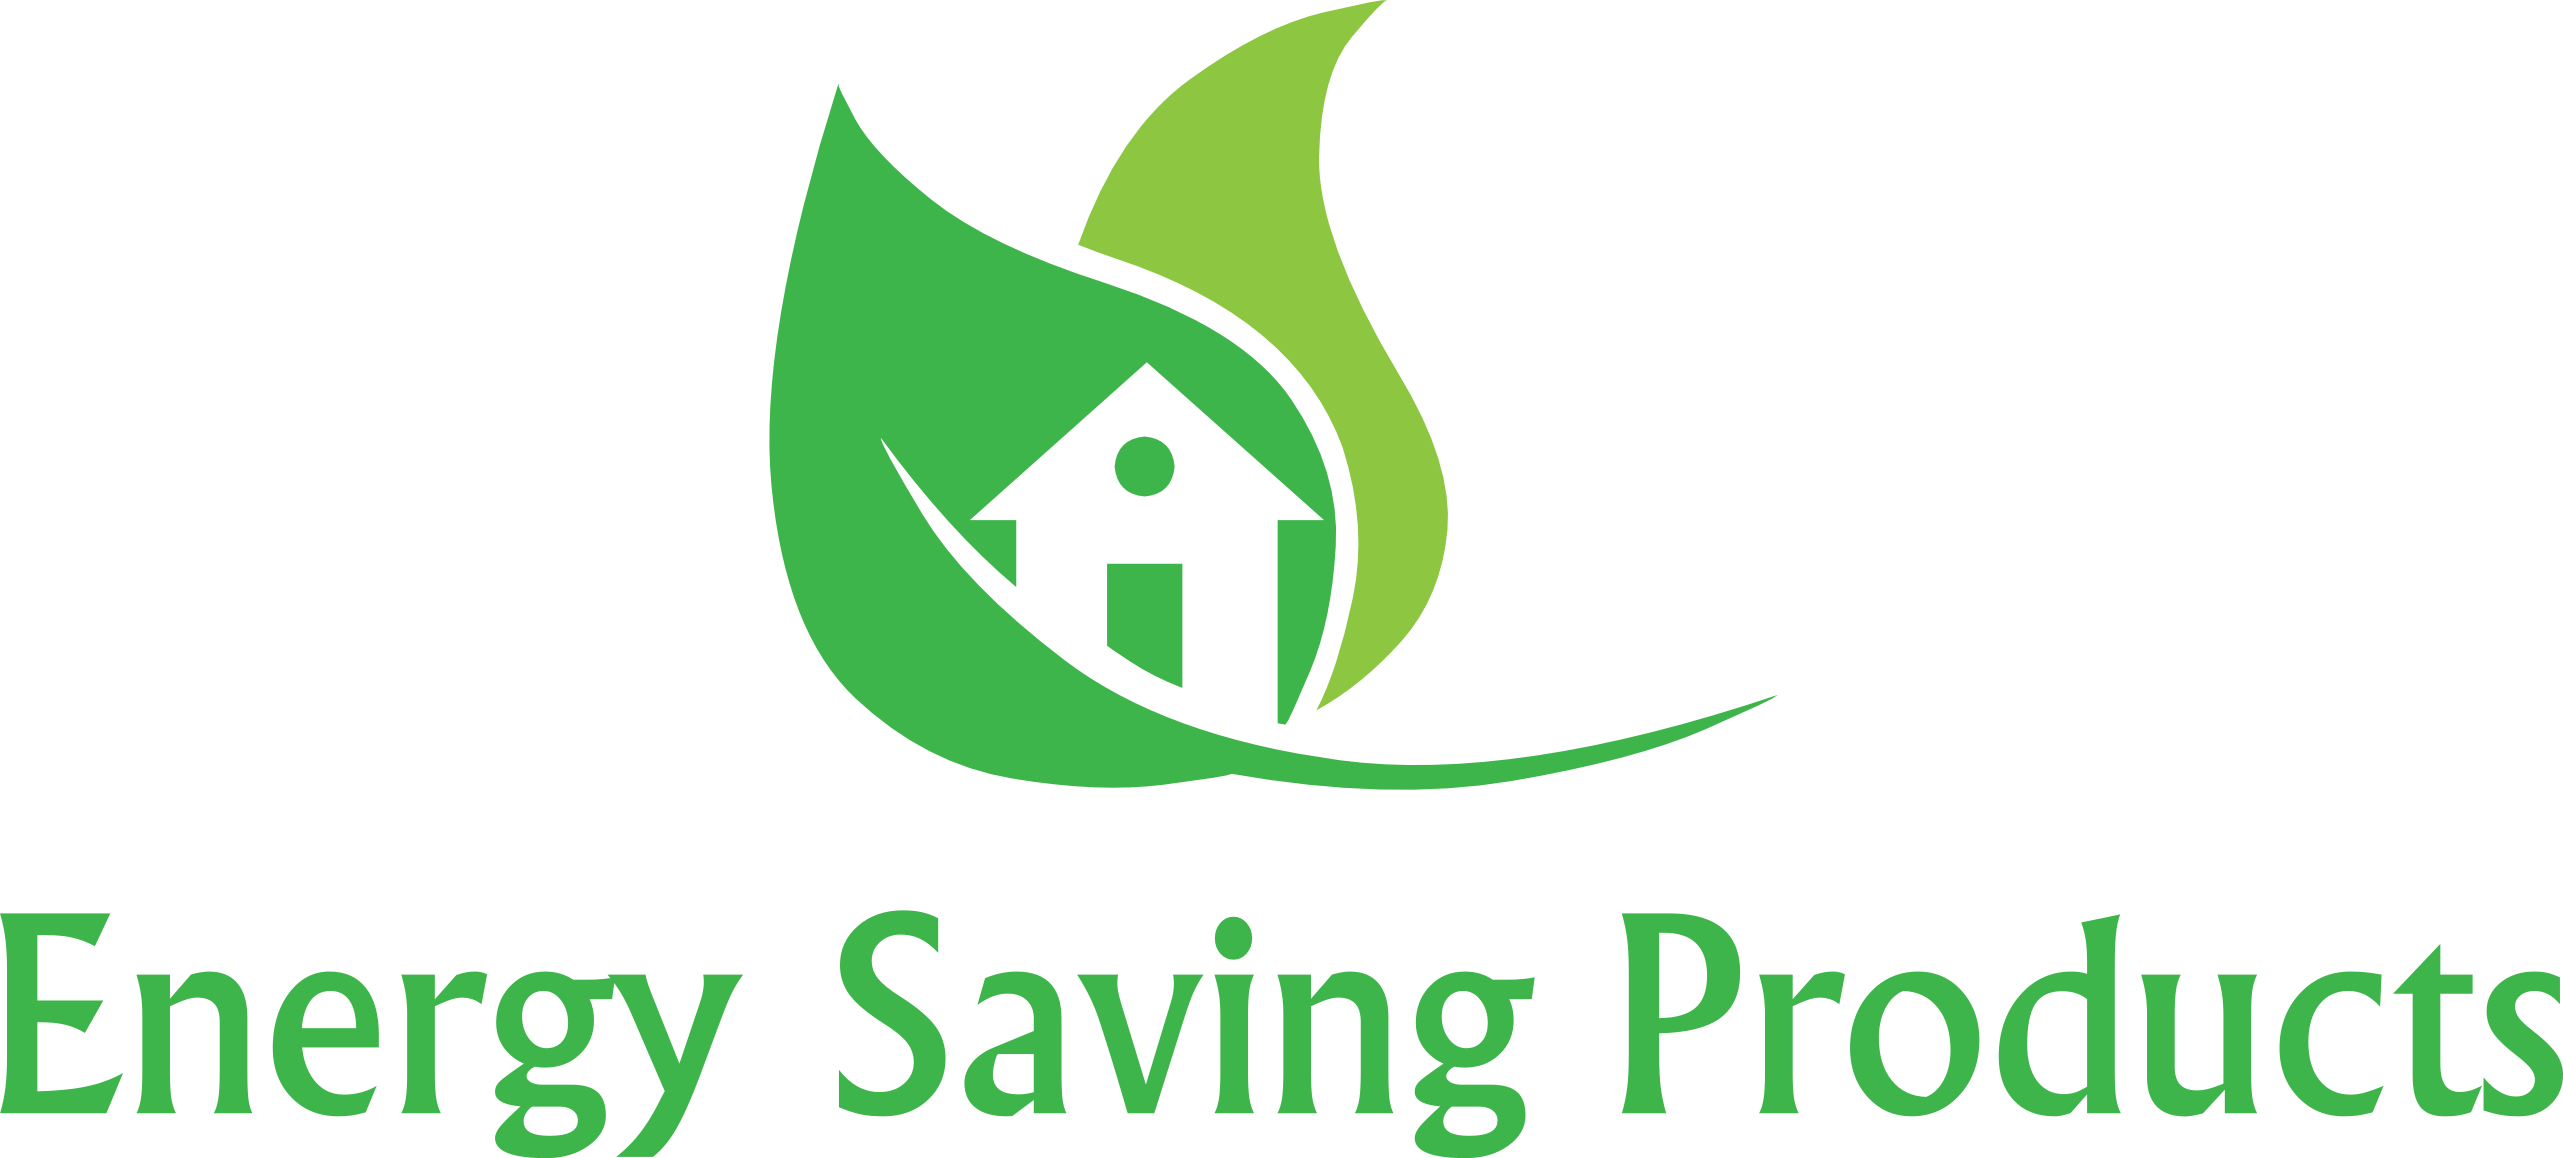 Energy Saving Products - Leading Edge Energy